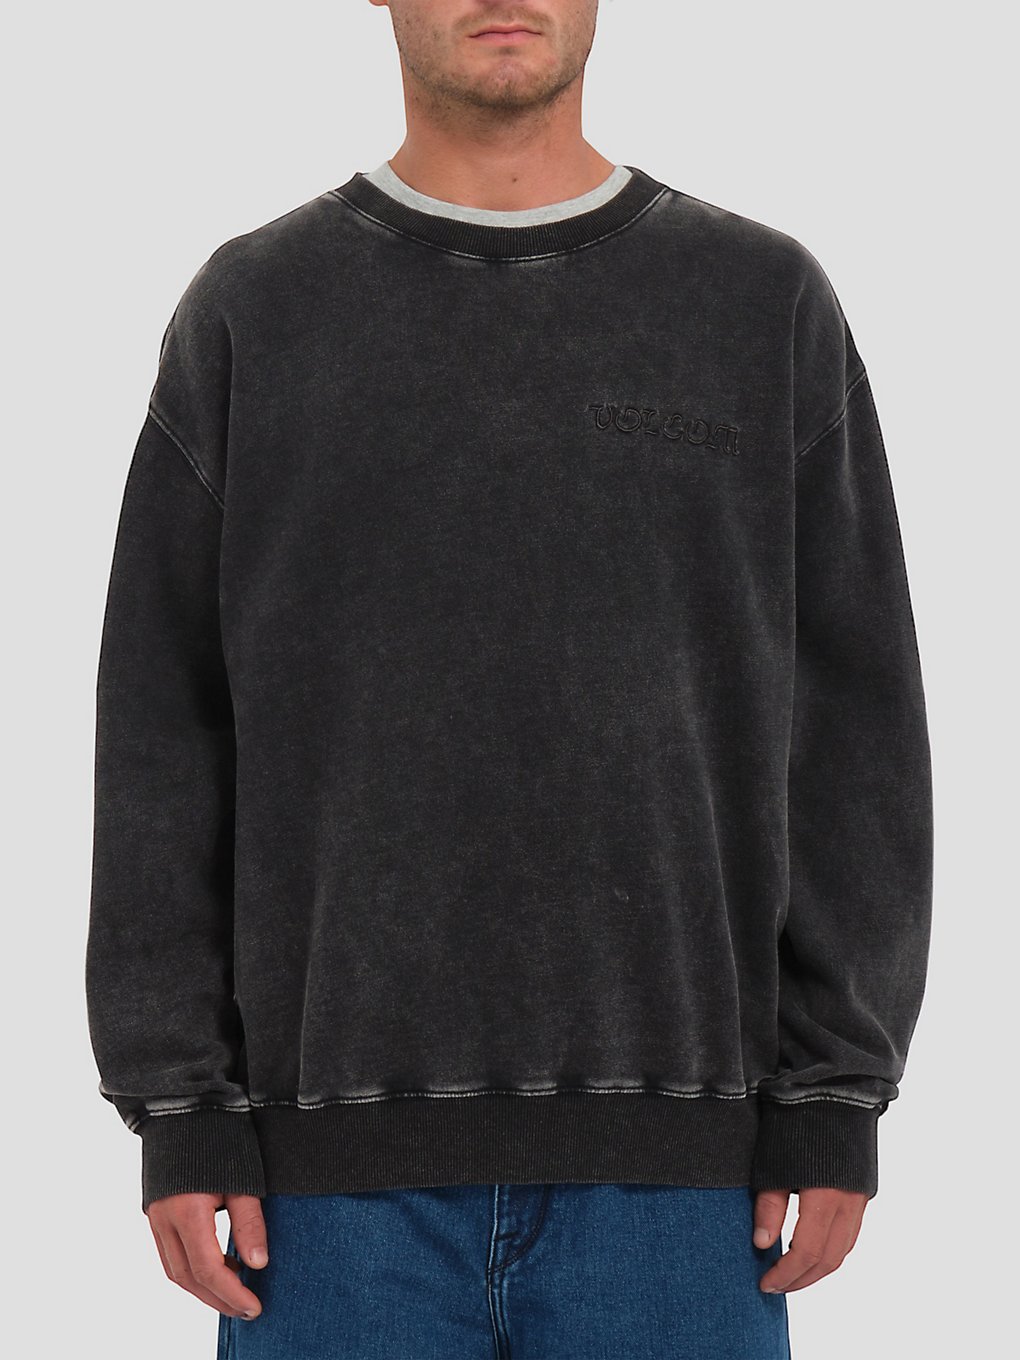 Volcom Acid Wall Crew Sweater black kaufen